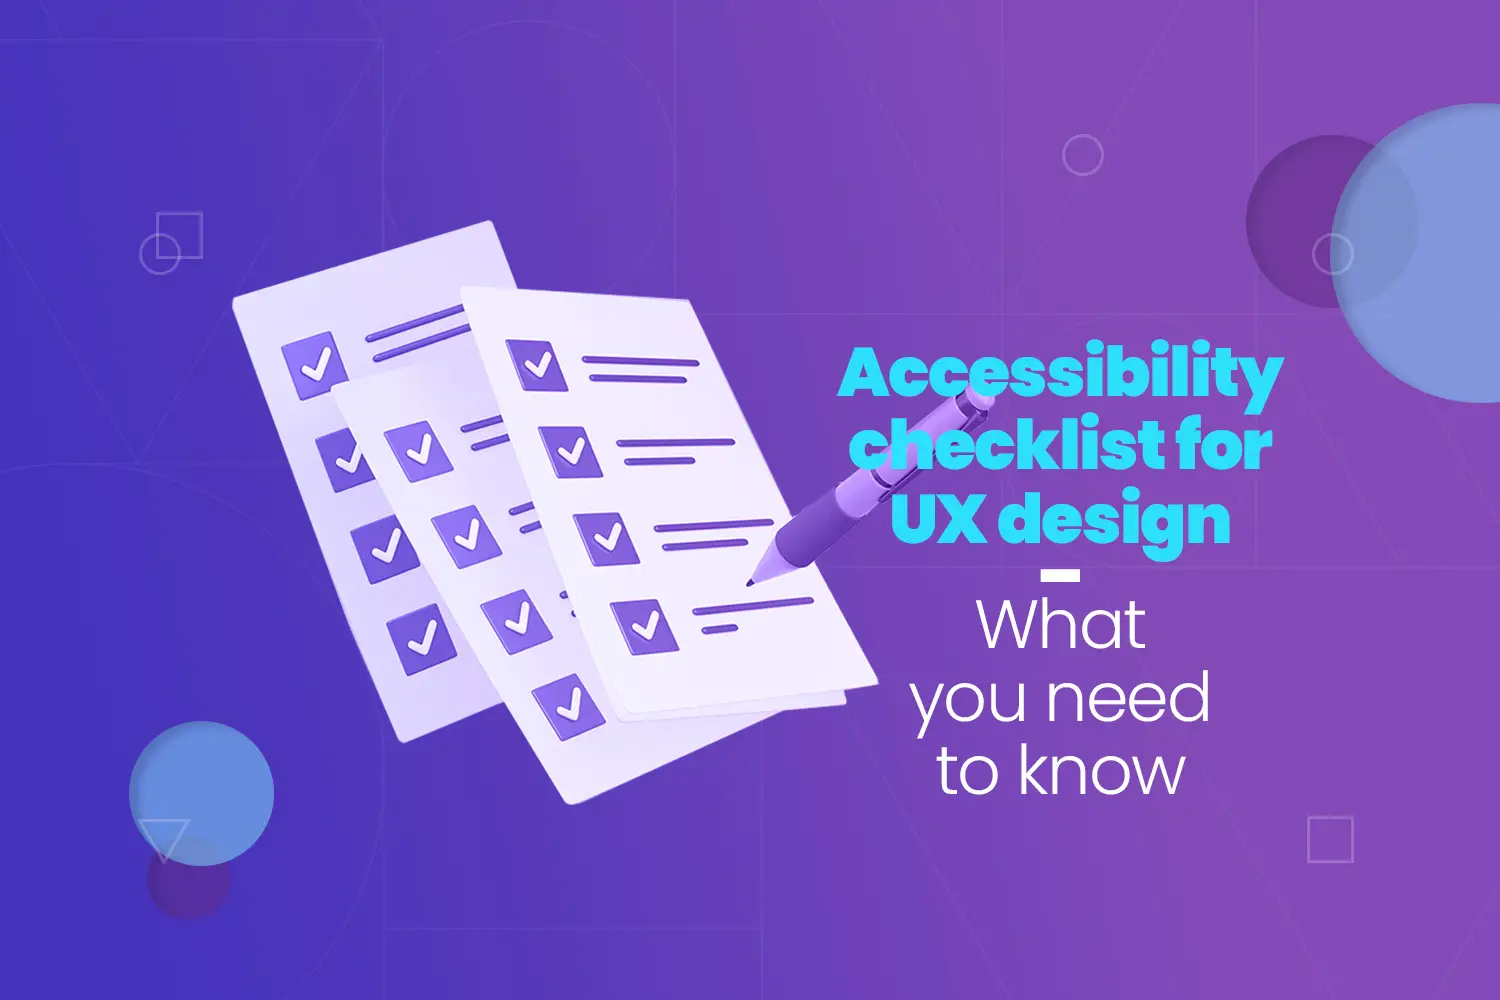 Checklist for accessibility in UX design